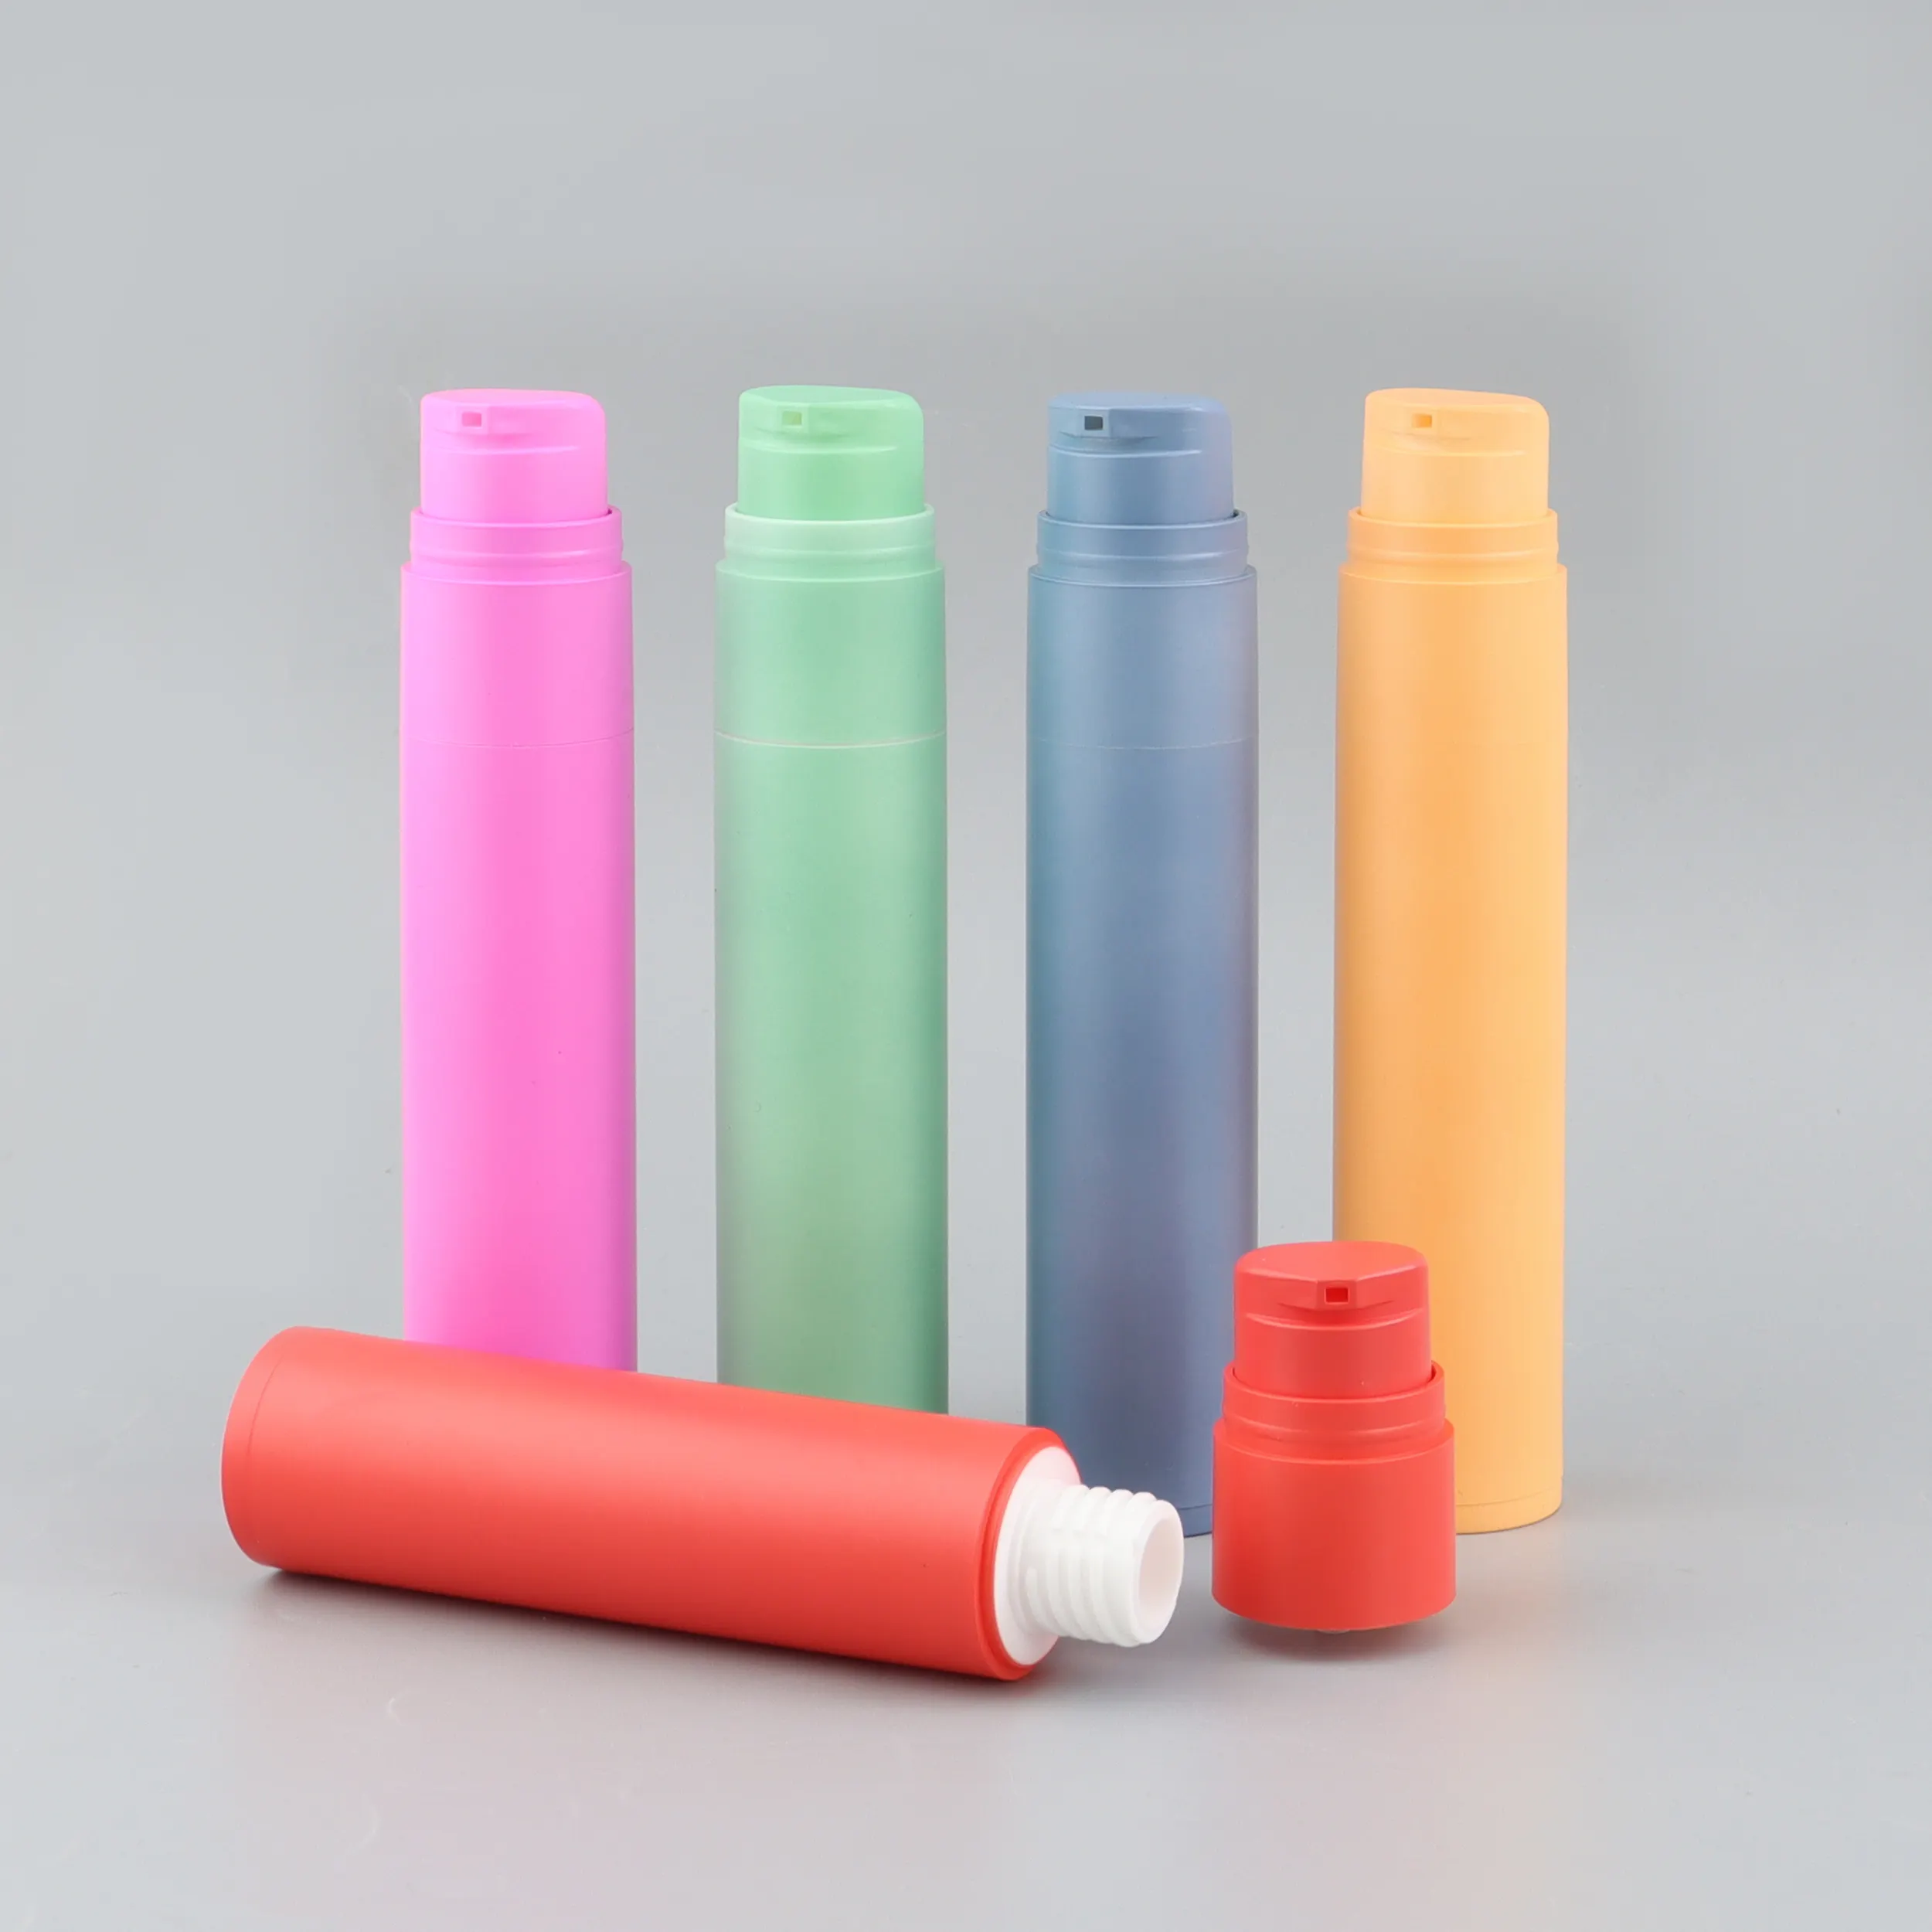 Bomba sin aire cosmética colorida recargable tubo de pasta de dientes PP botella de plástico 60ml botella delgada